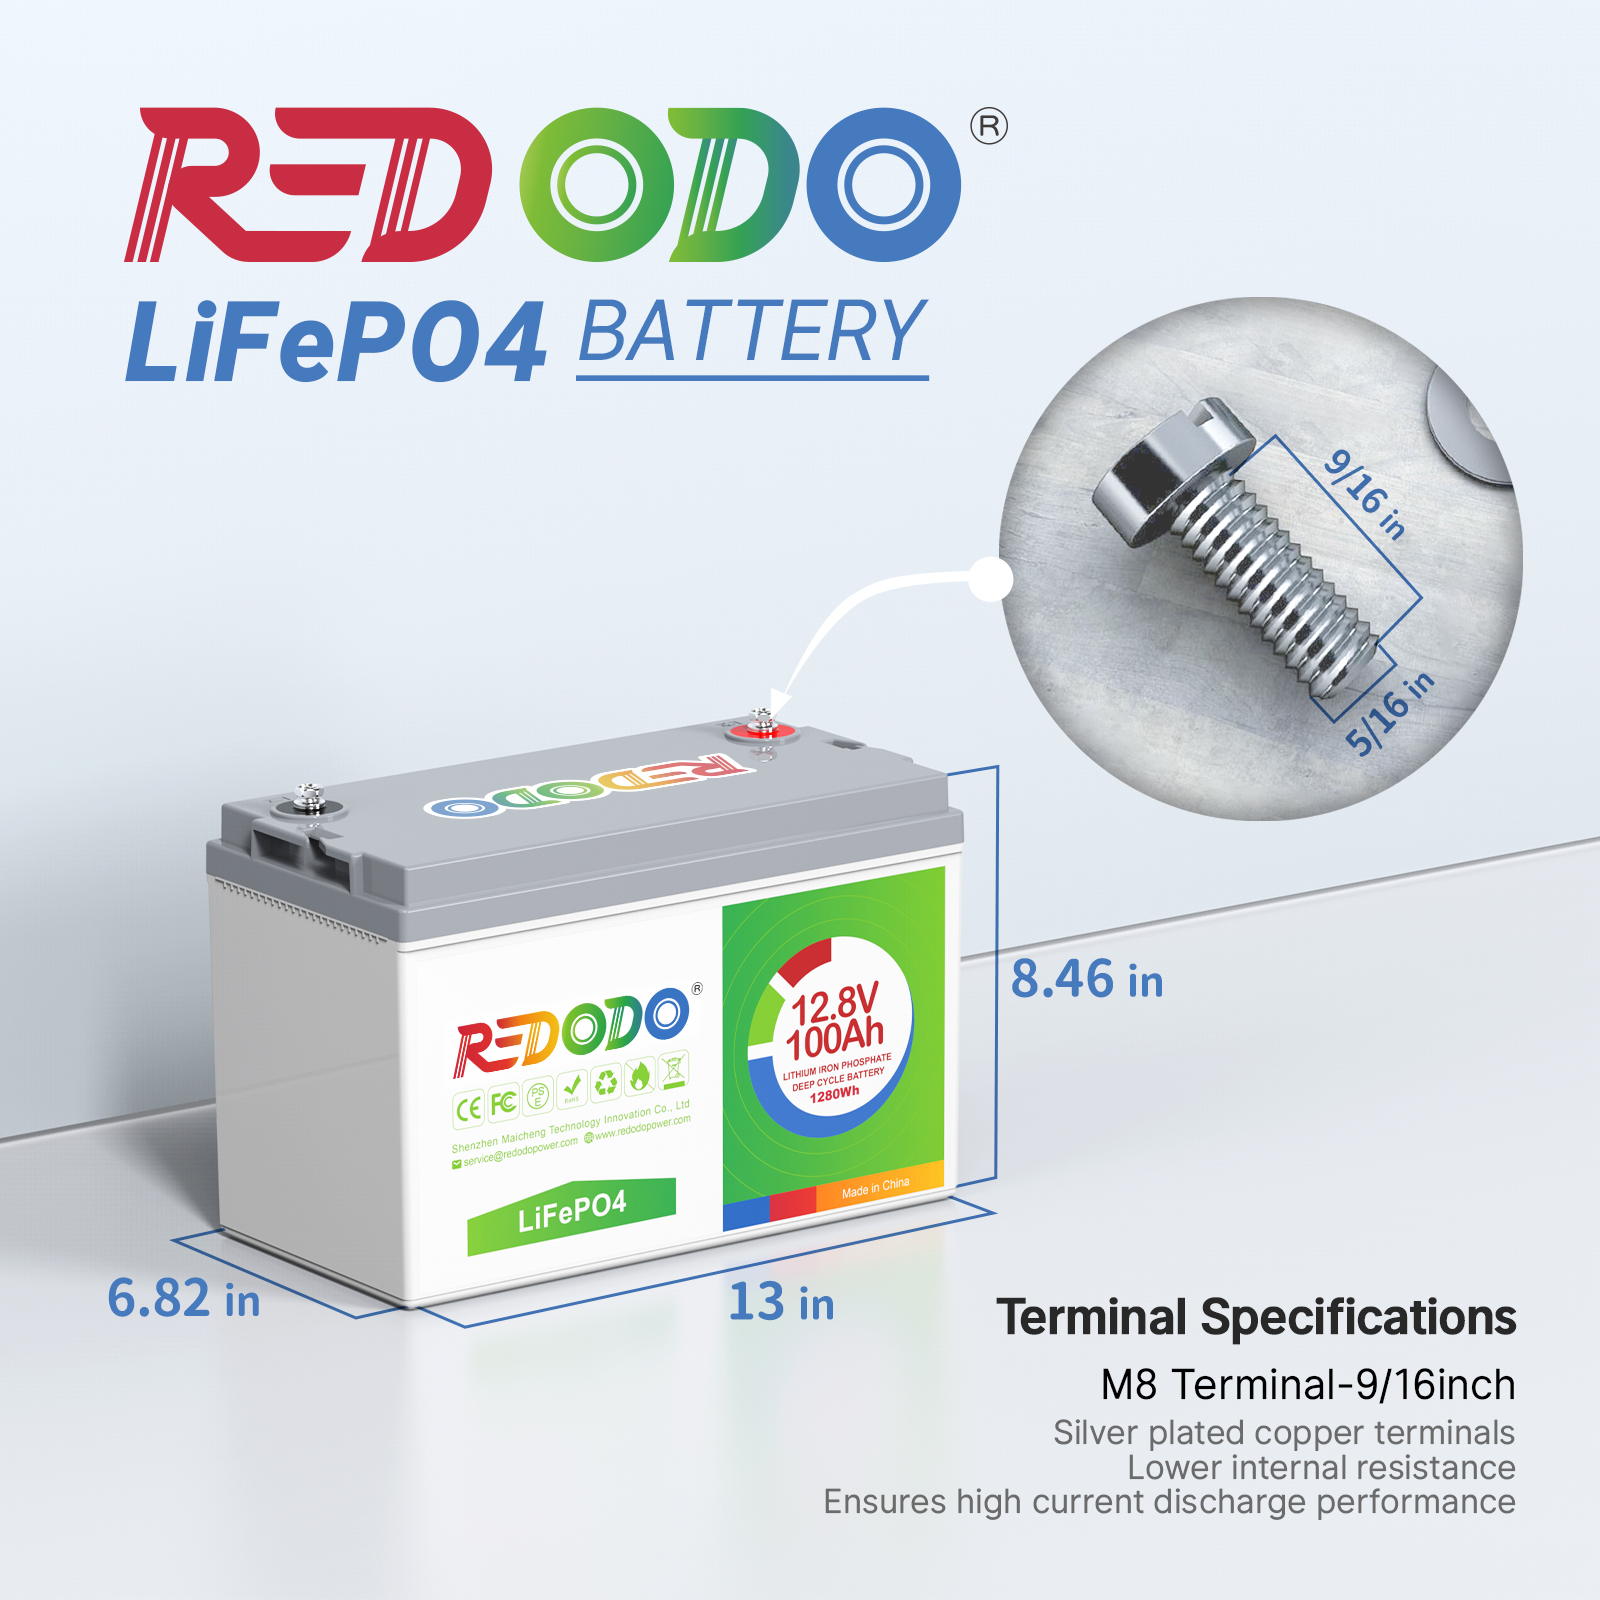 Redodo 12V 100Ah LiFePO4 battery | 1.28kWh & 1.28kW